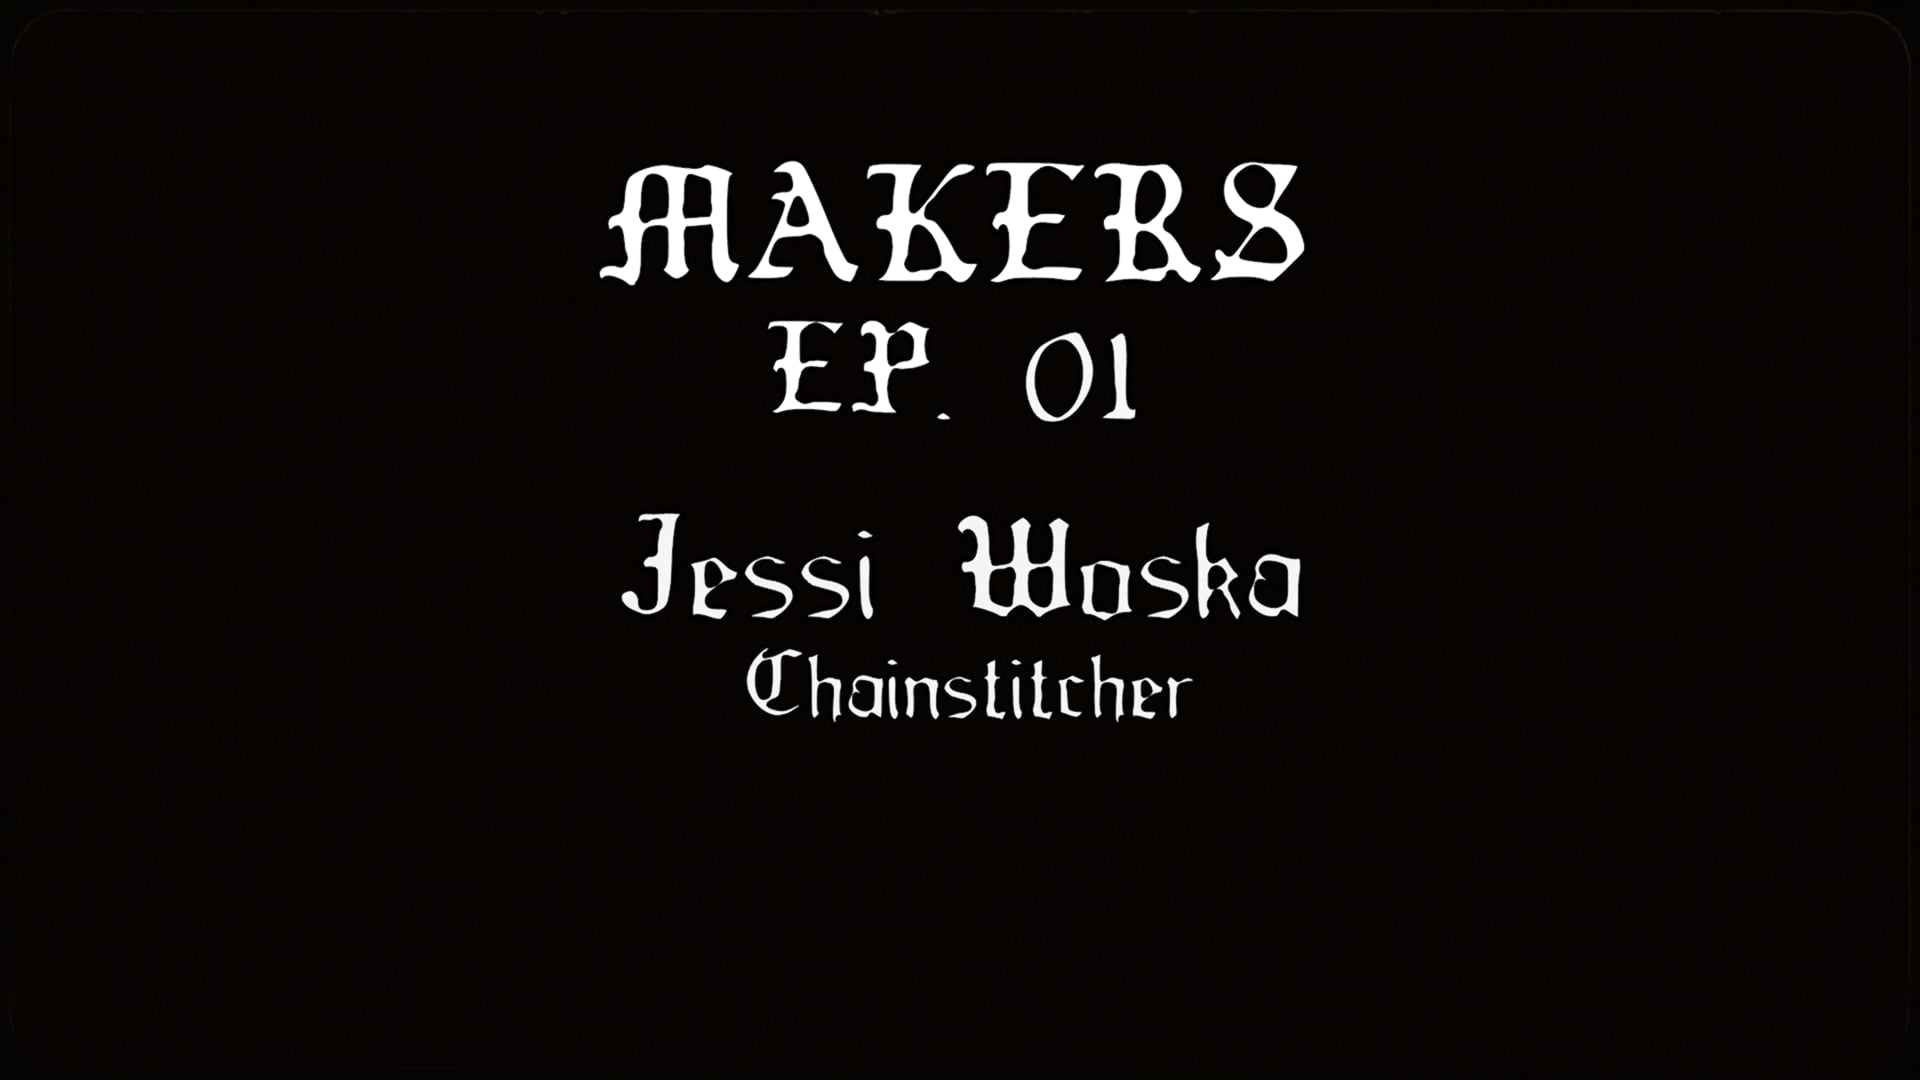 Makers Ep.01 - Jessi Woska - Chainstitcher